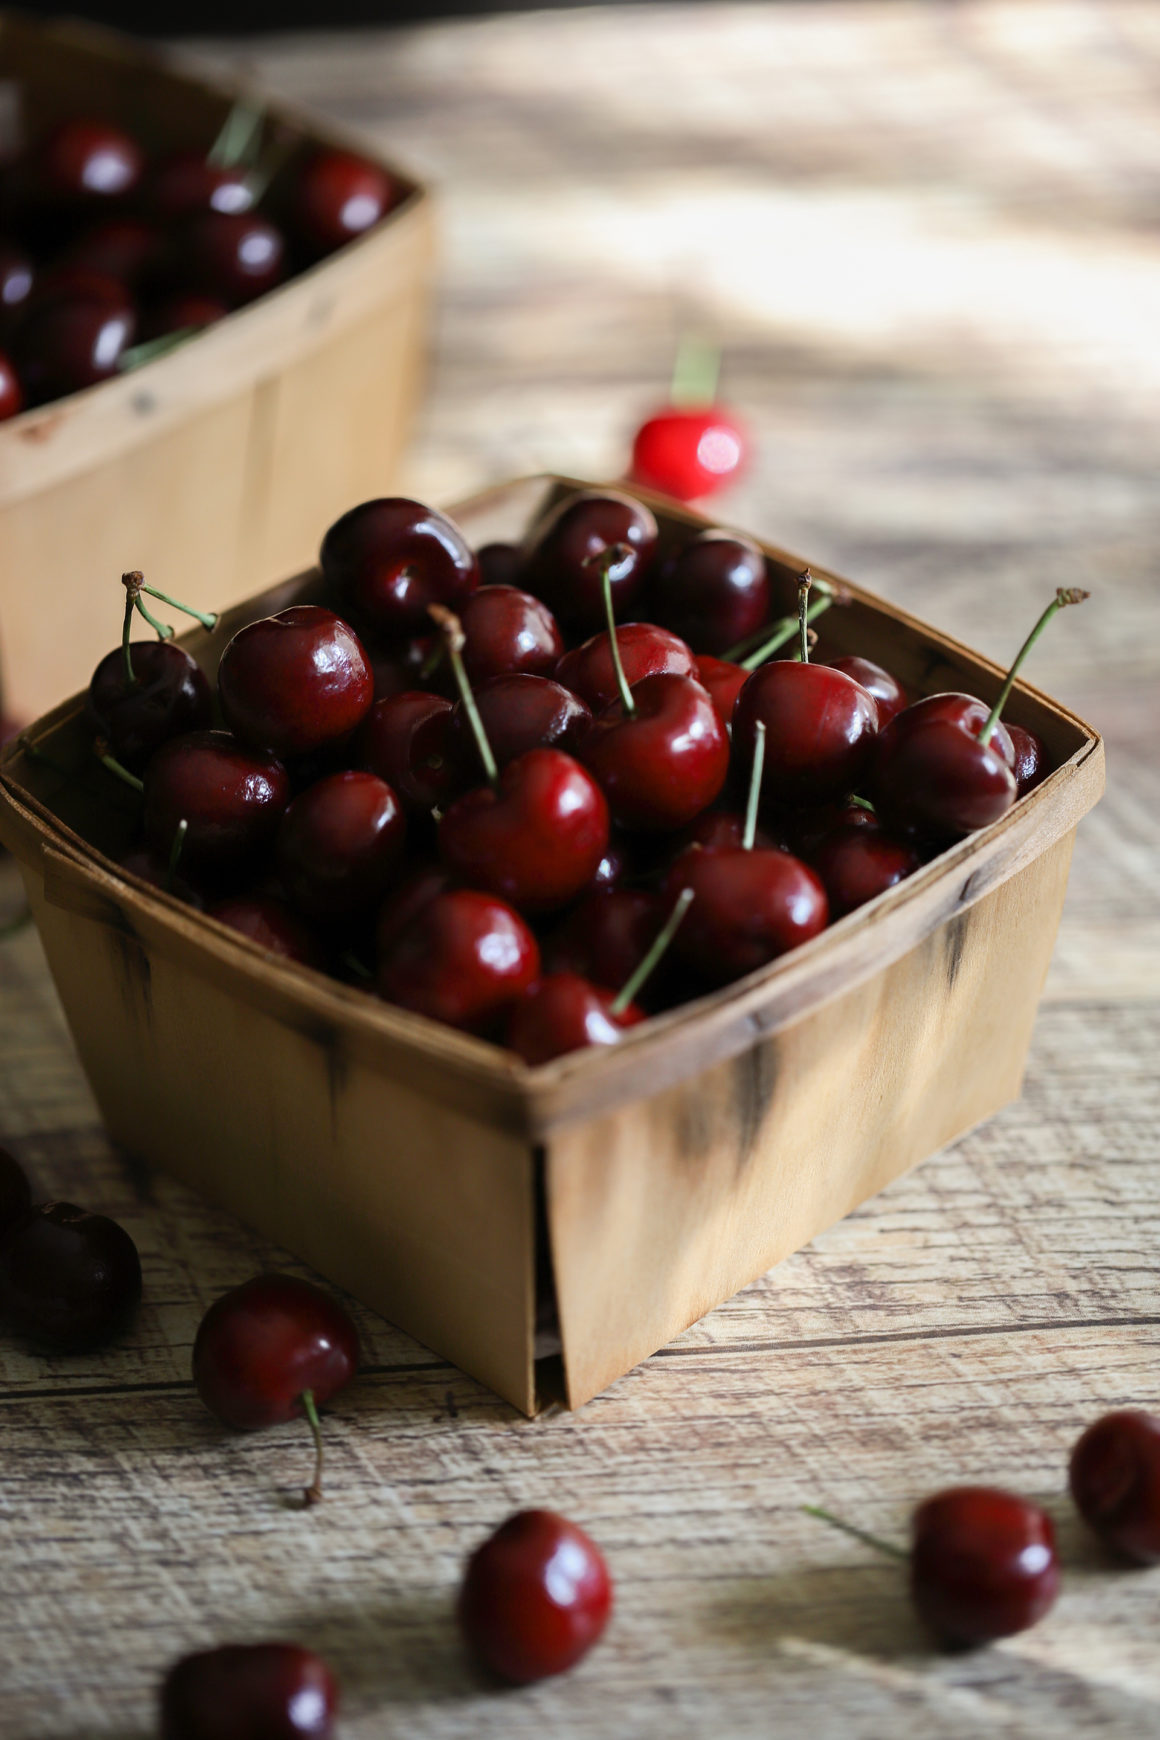 bing cherries in a wooden basket